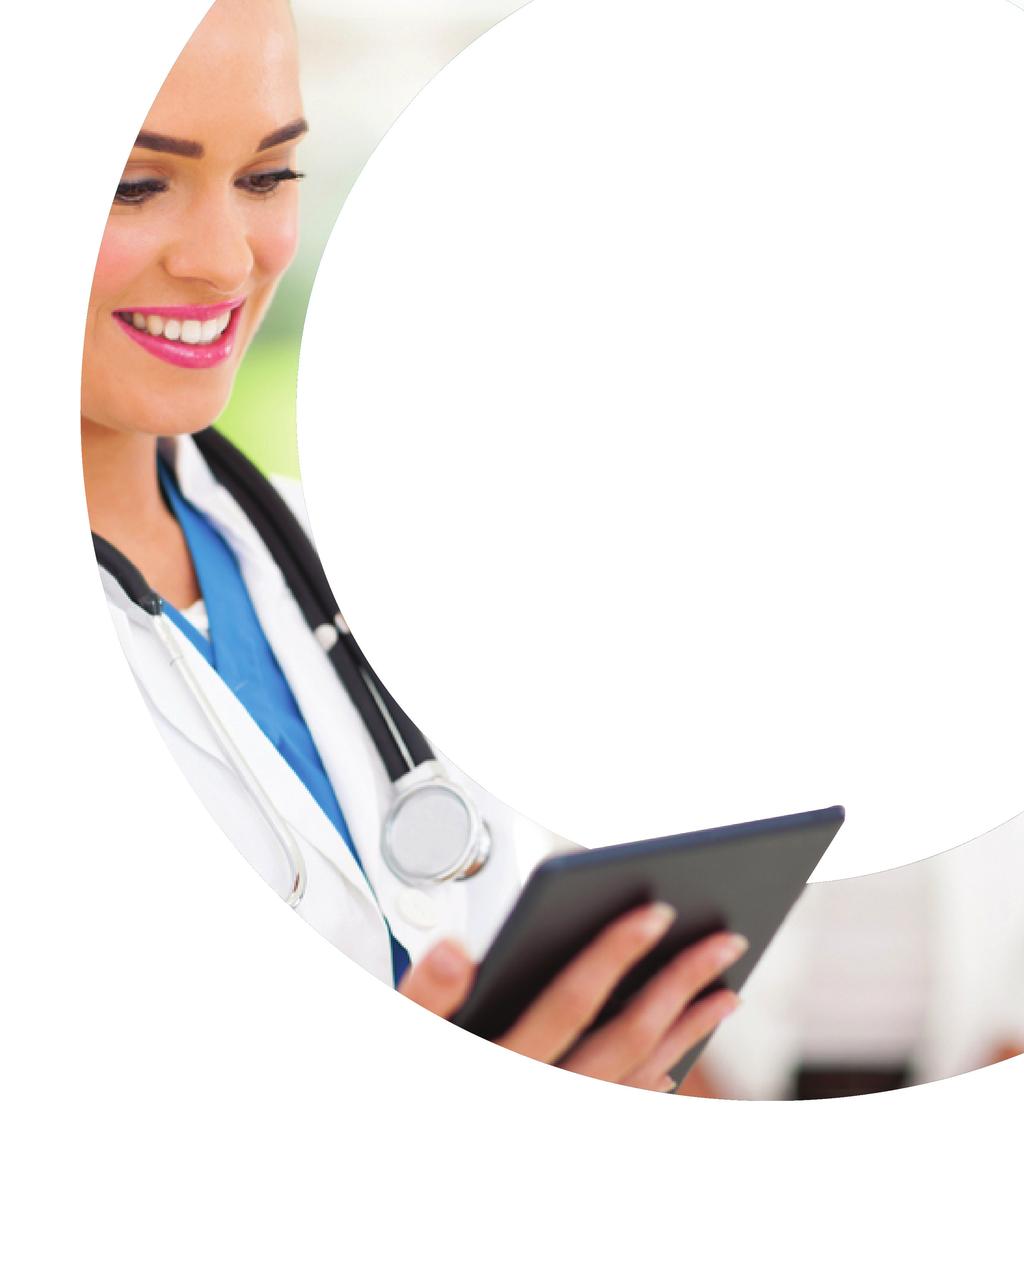 DigitalPersona for Healthcare Organizations RAPID,